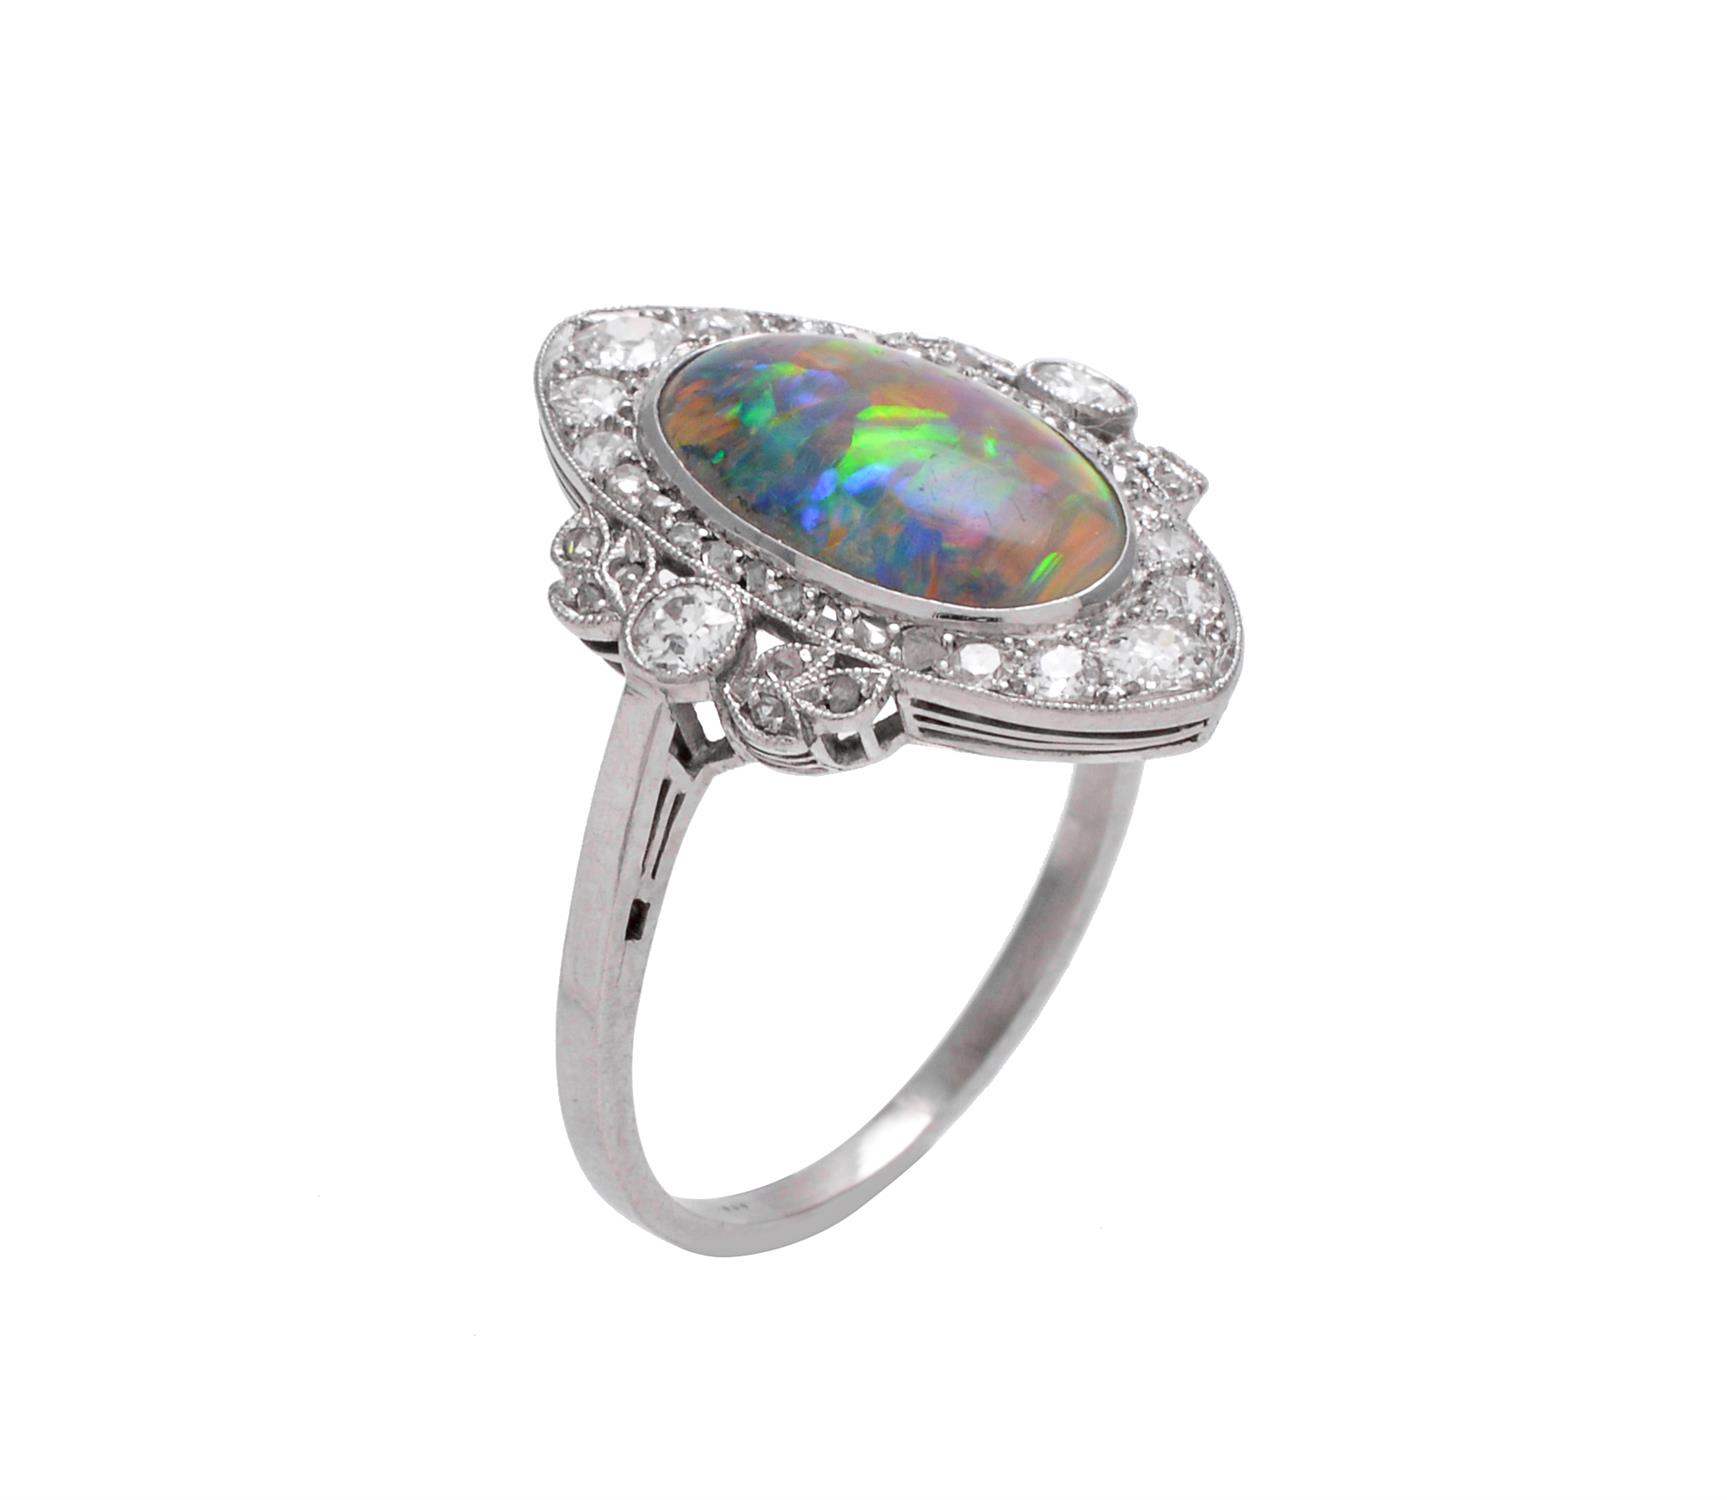 A Edwardian black opal and diamond panel ring